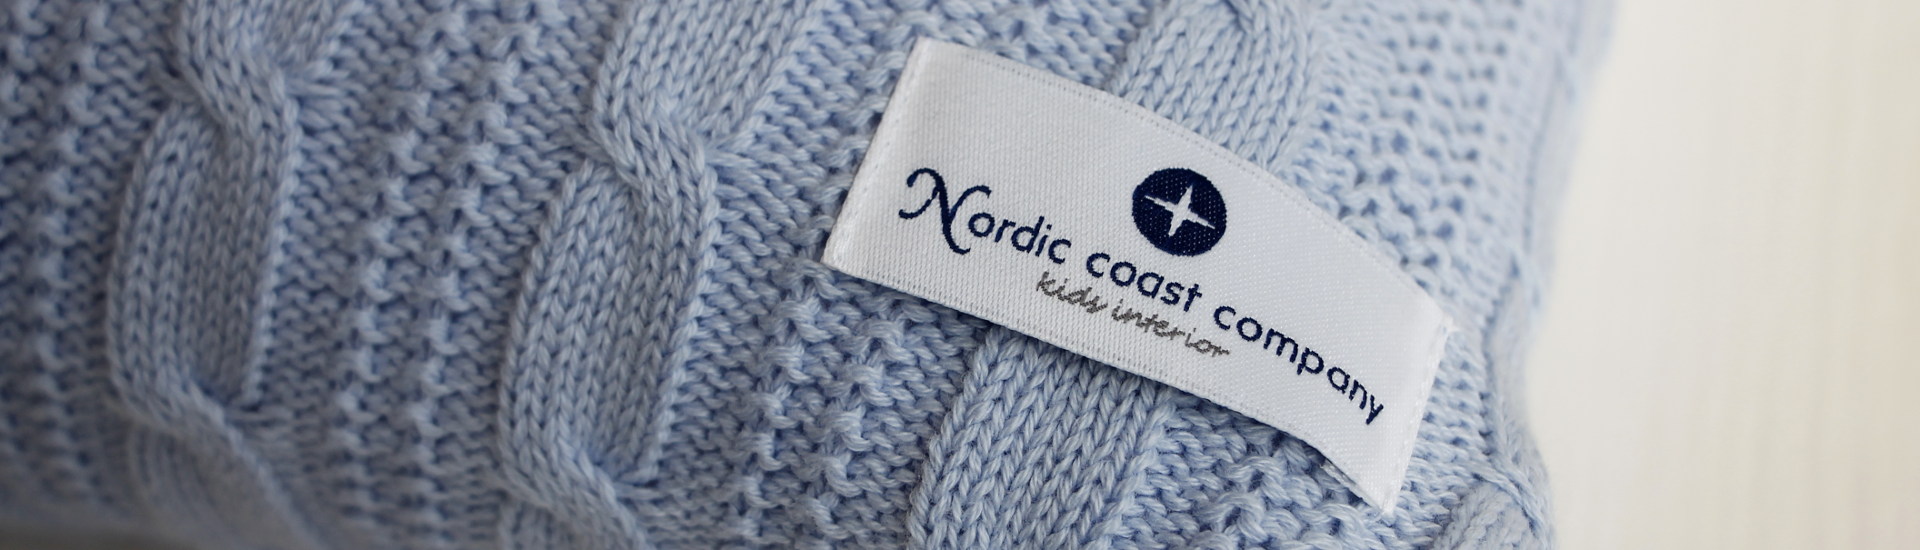 Nordic Coast Company Gewinnspiel